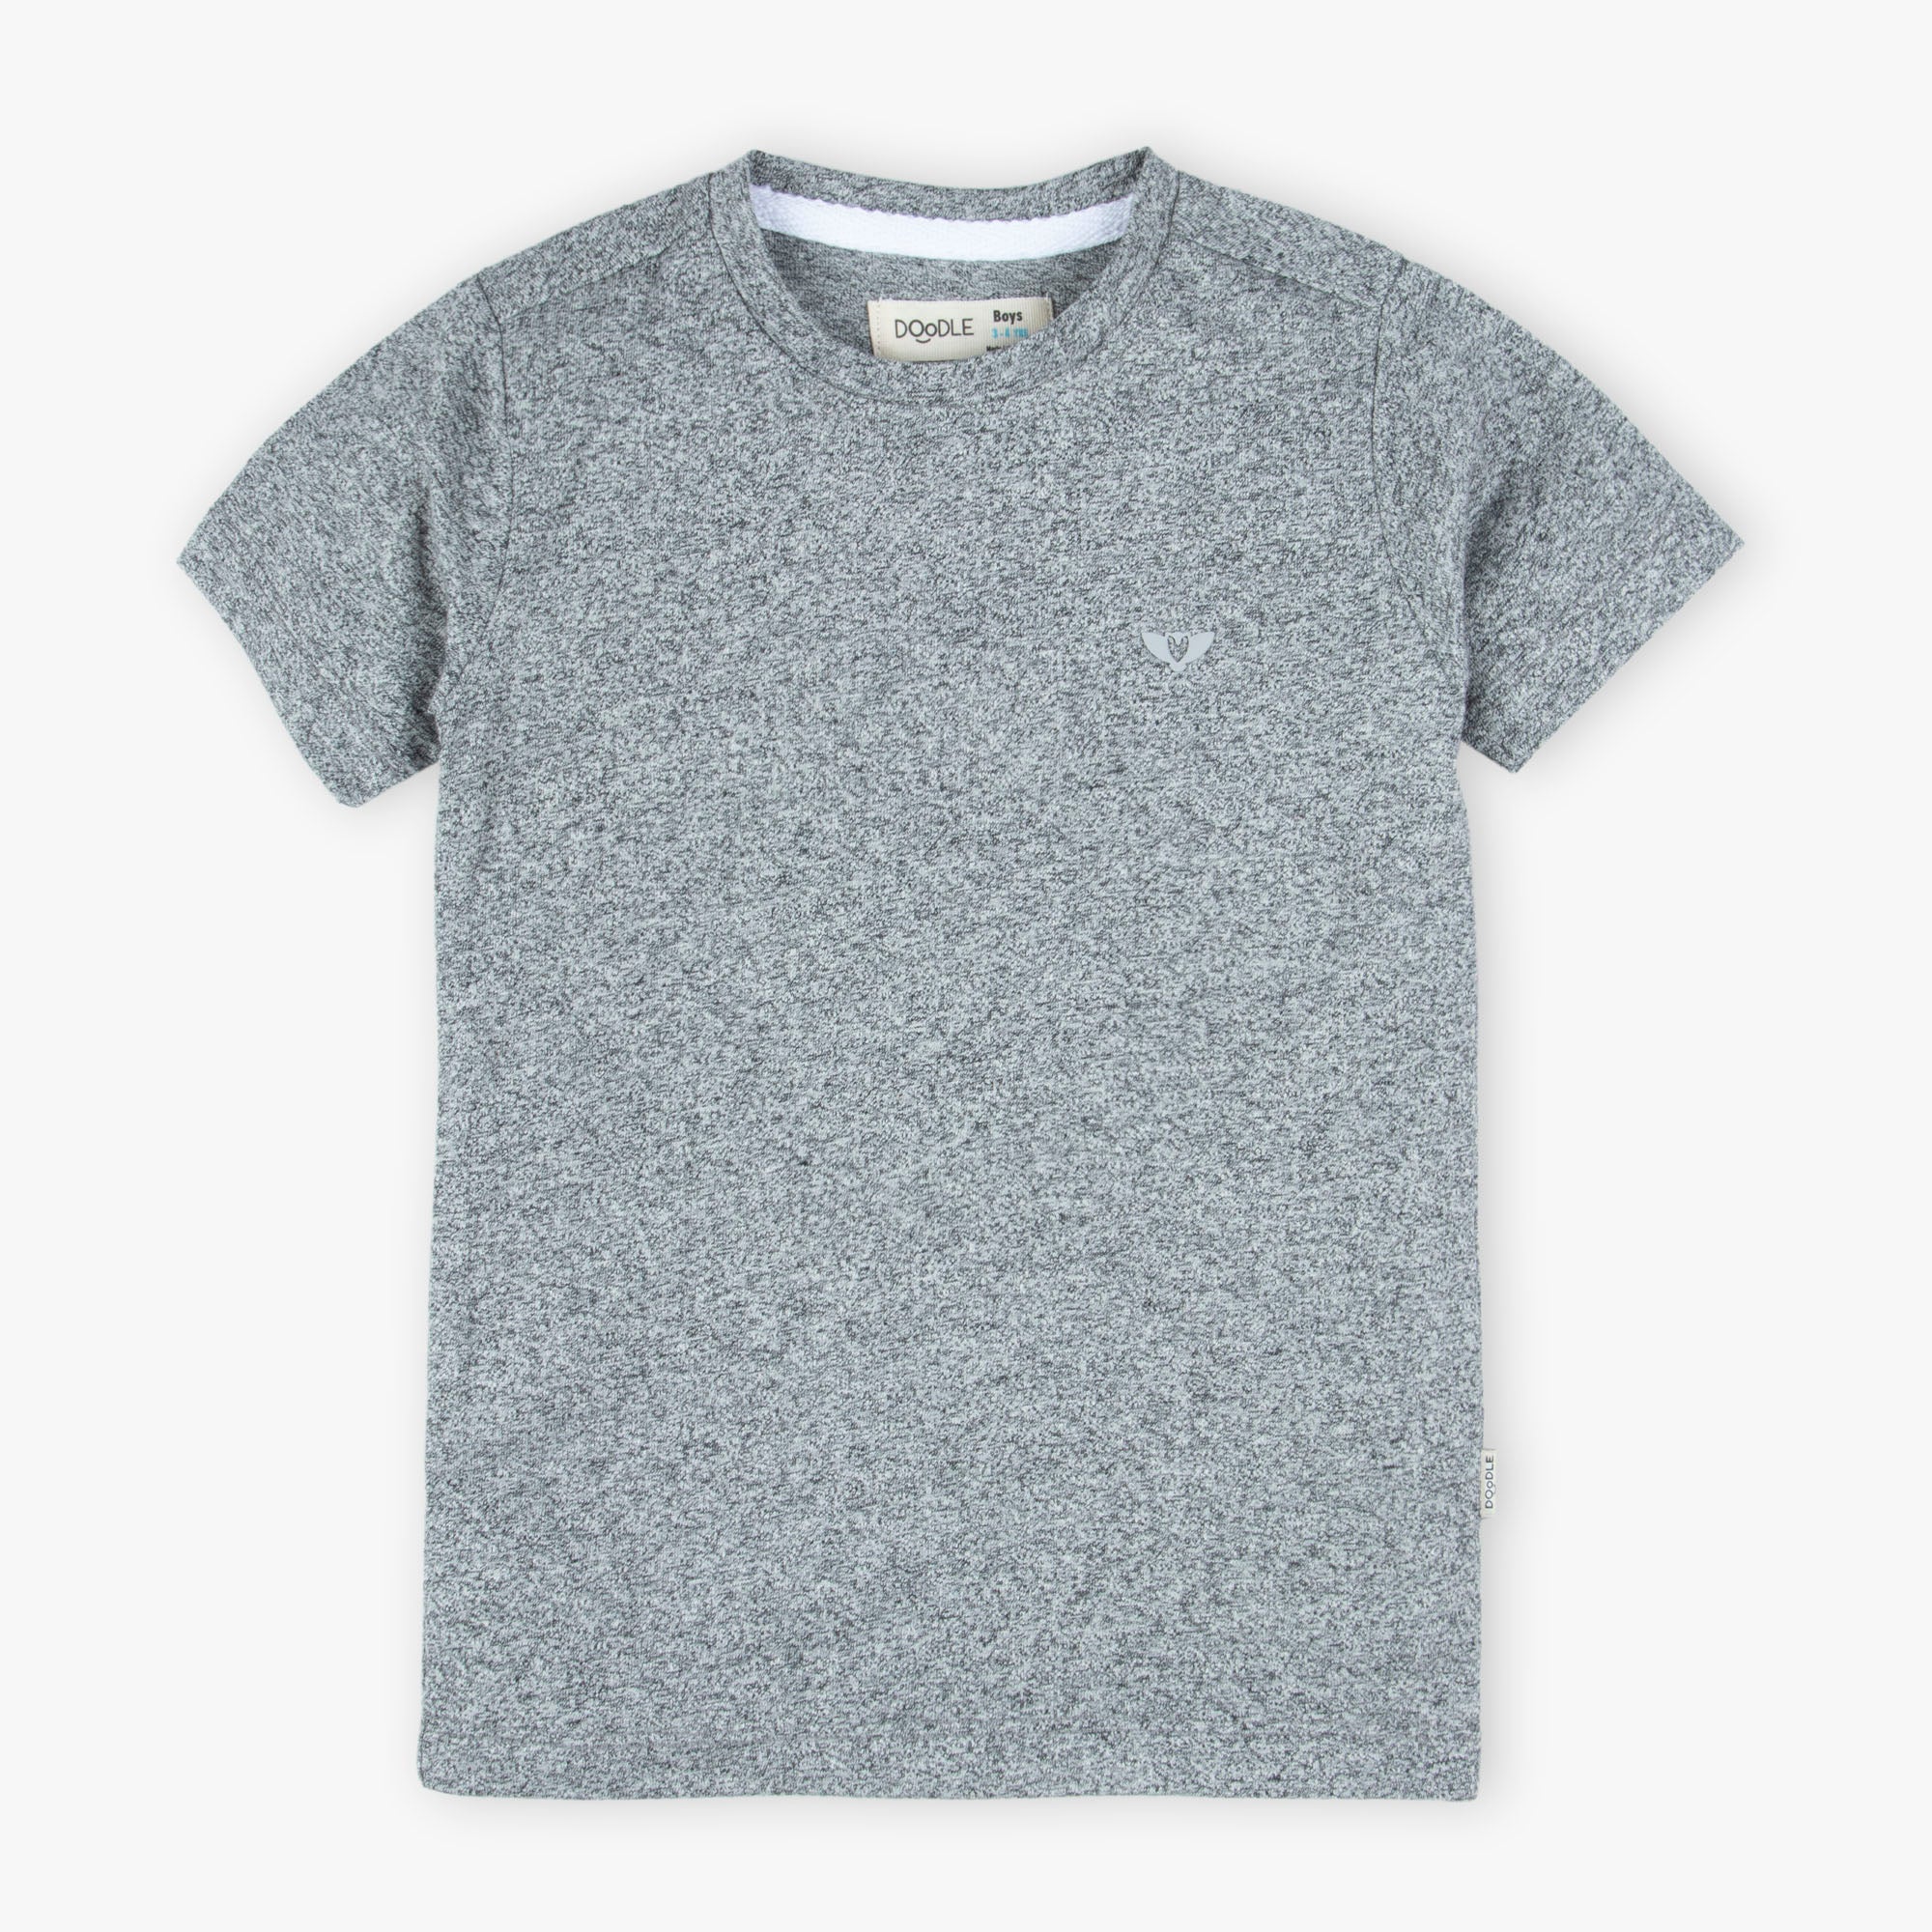 Grainy Grey T-shirt